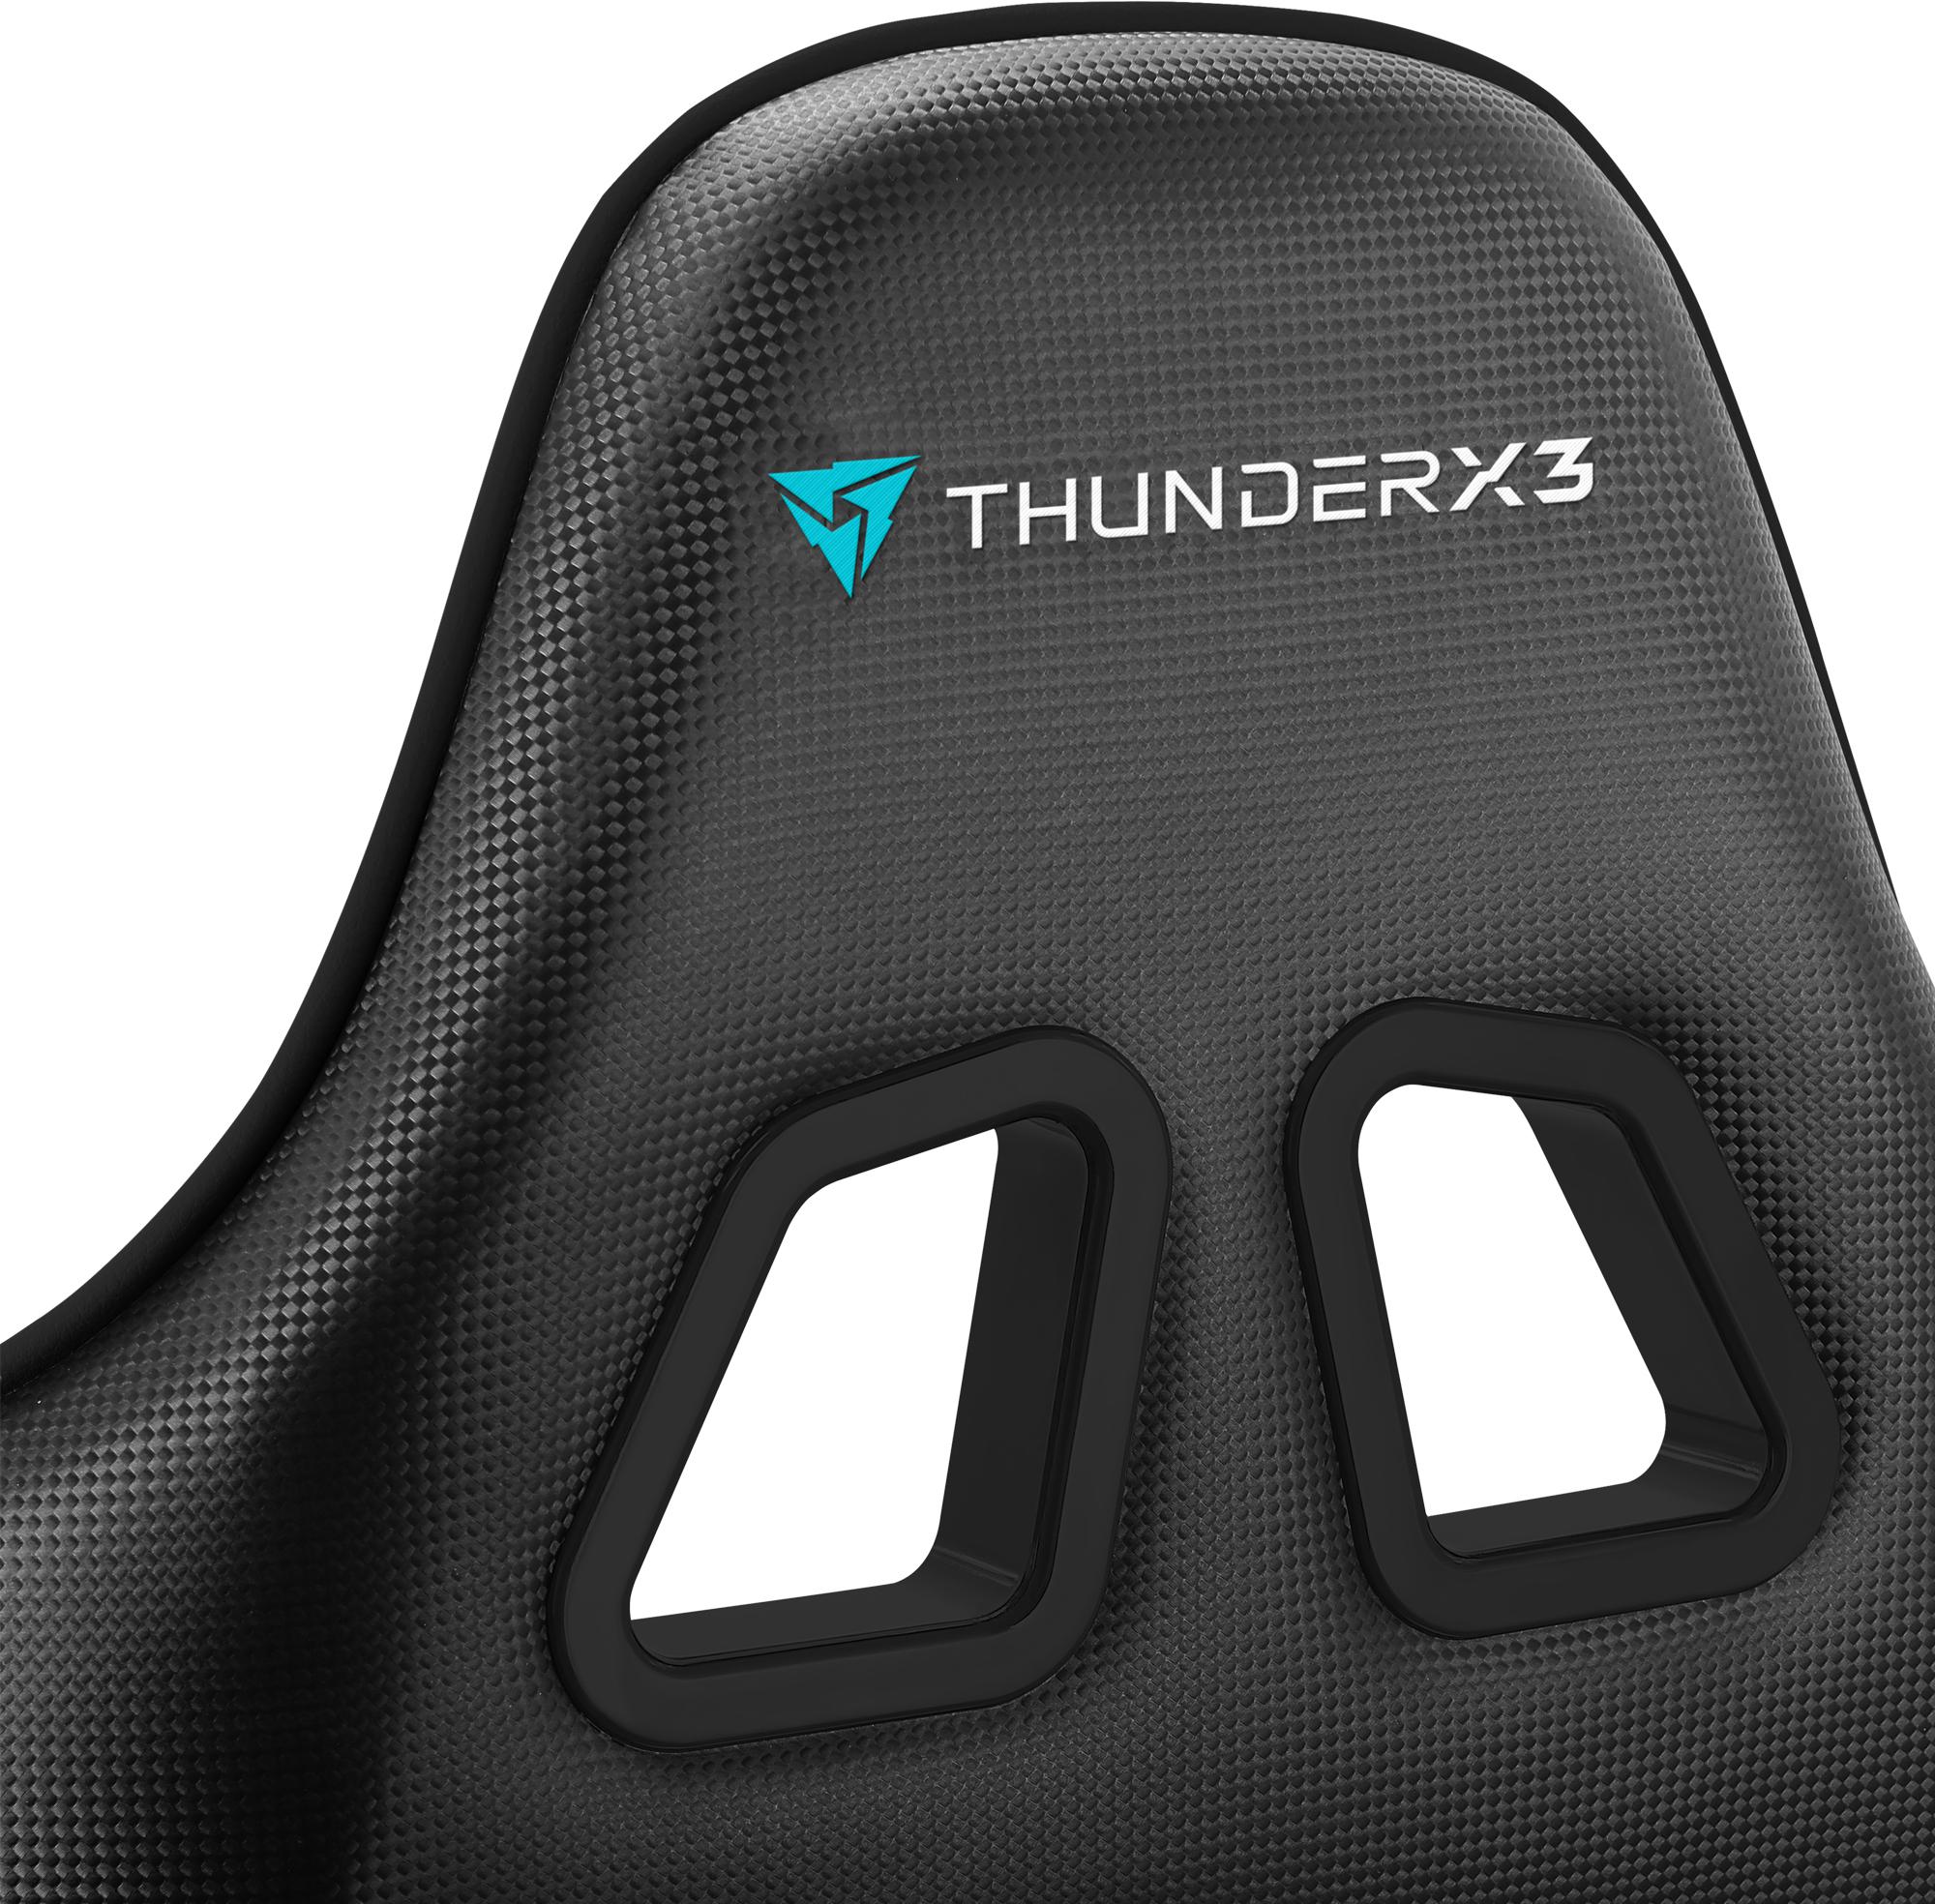 ThunderX3 - Cadeira Gaming ThunderX3 EC3 Air - Preta